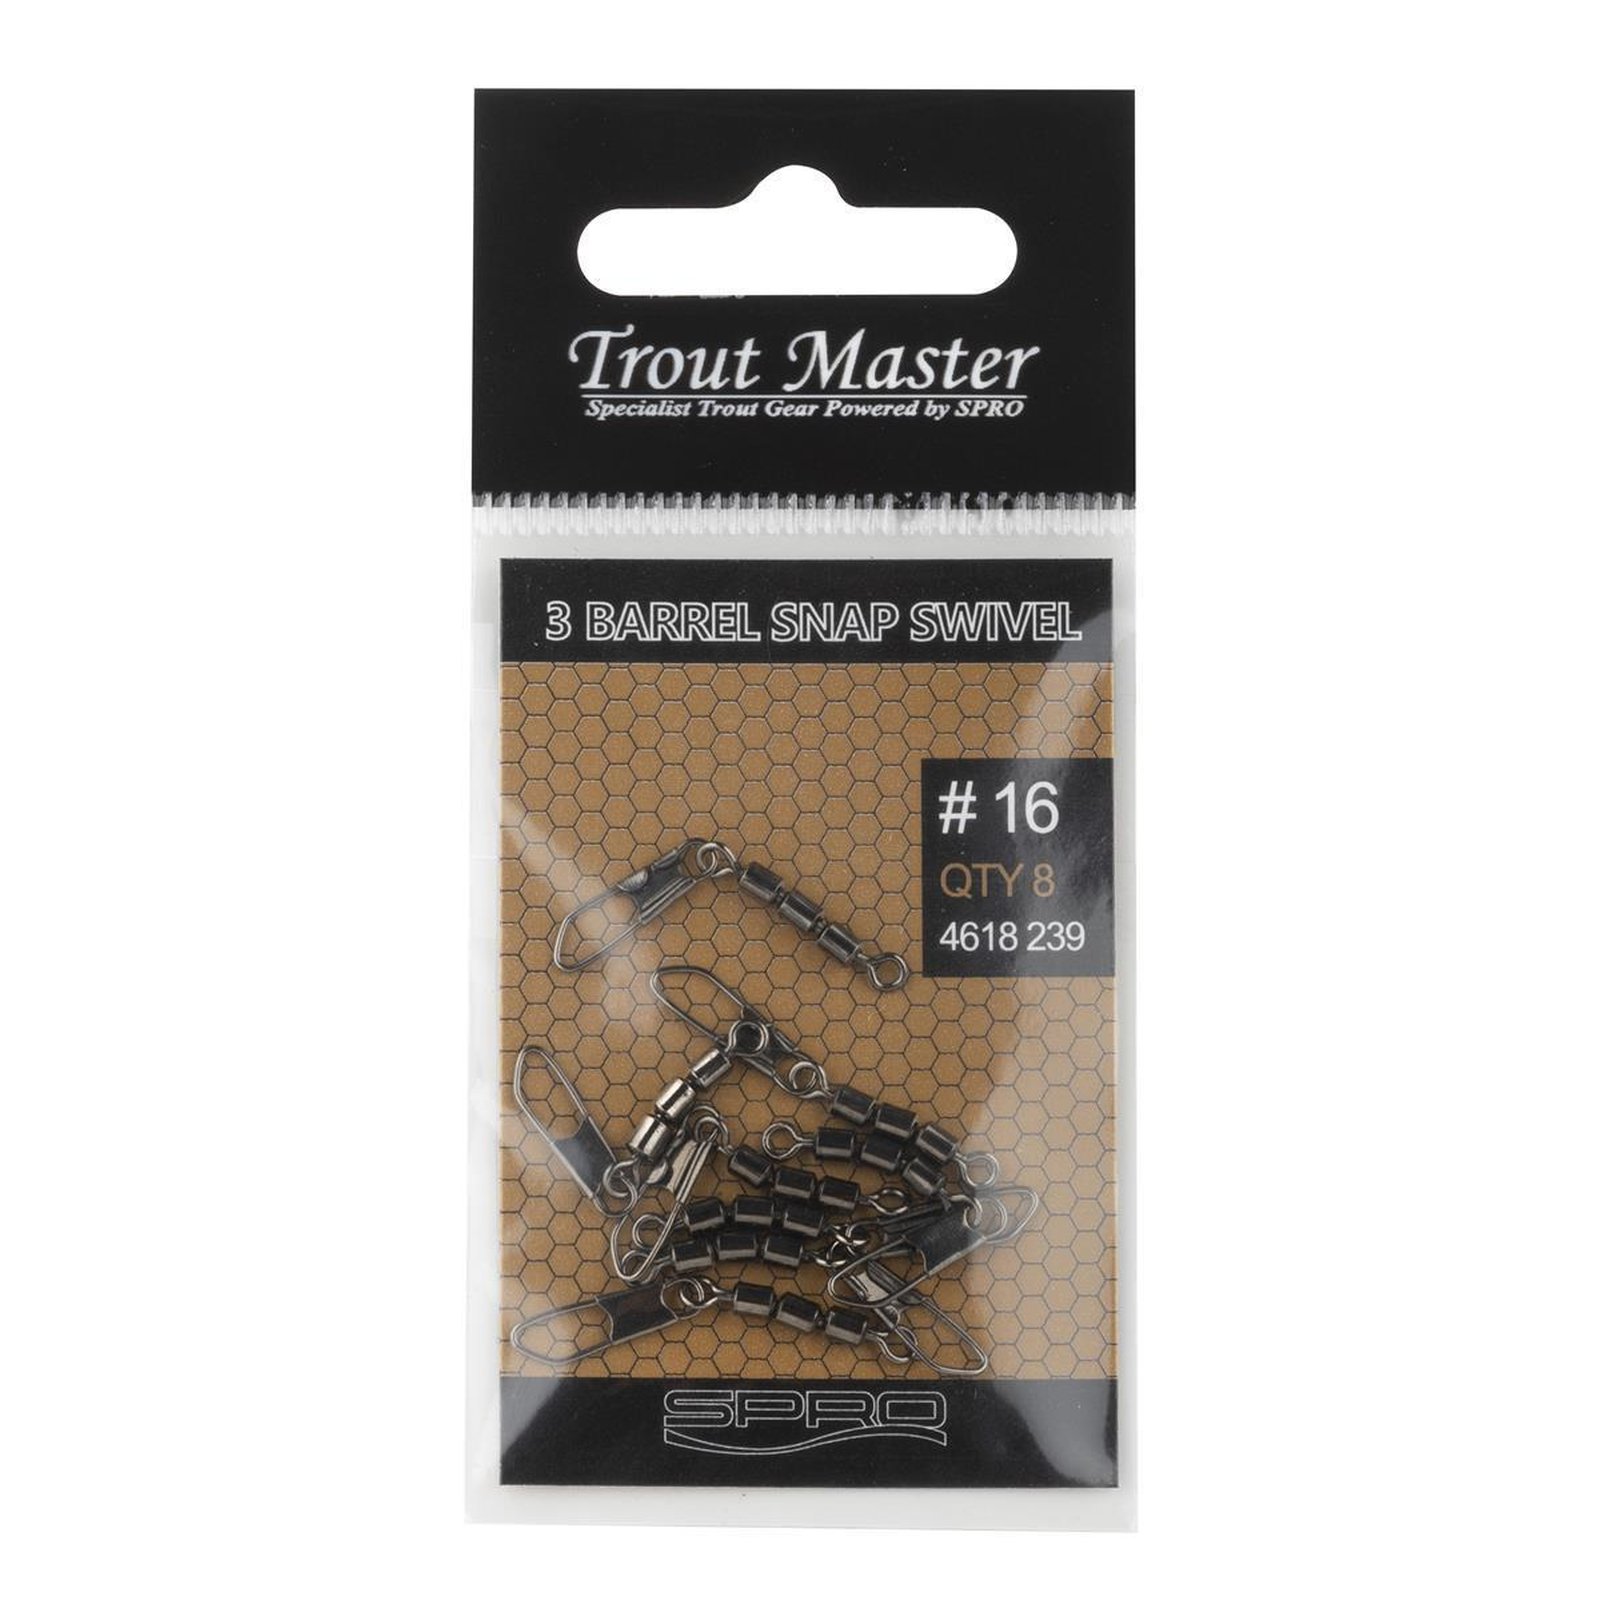 Trout Master 3 Barrel Snap Swivel #16